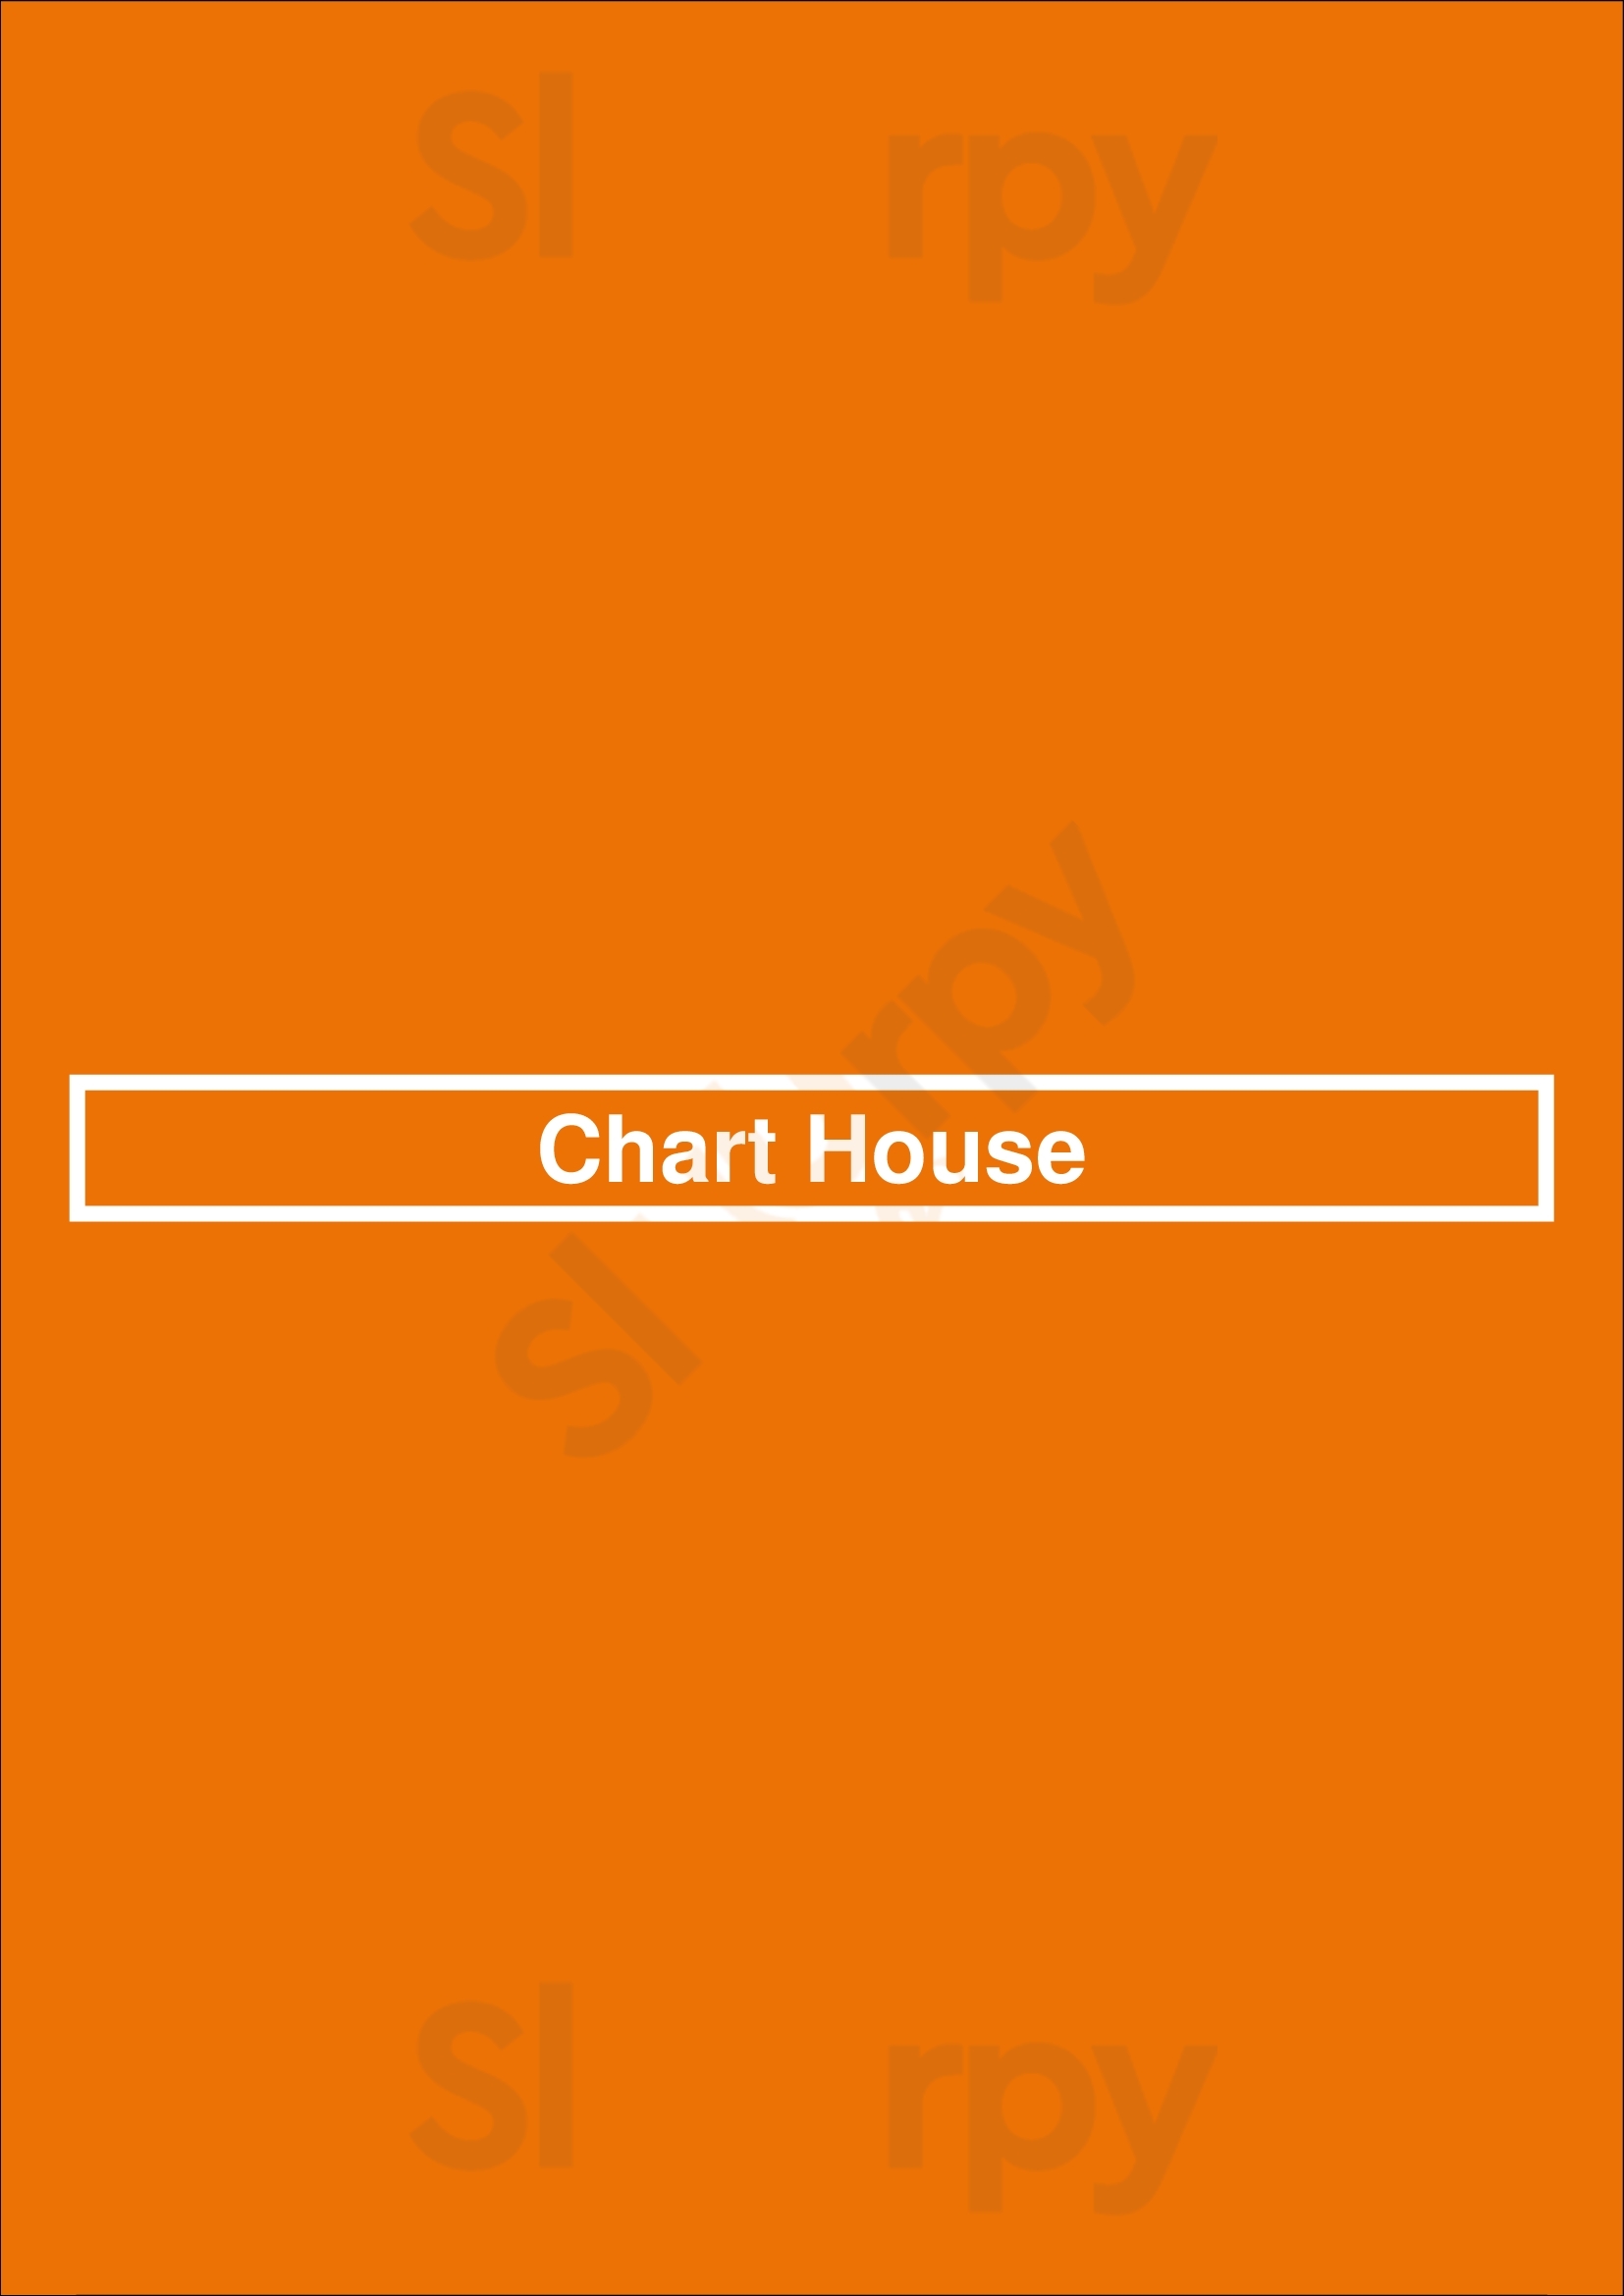 Chart House Philadelphia Menu - 1